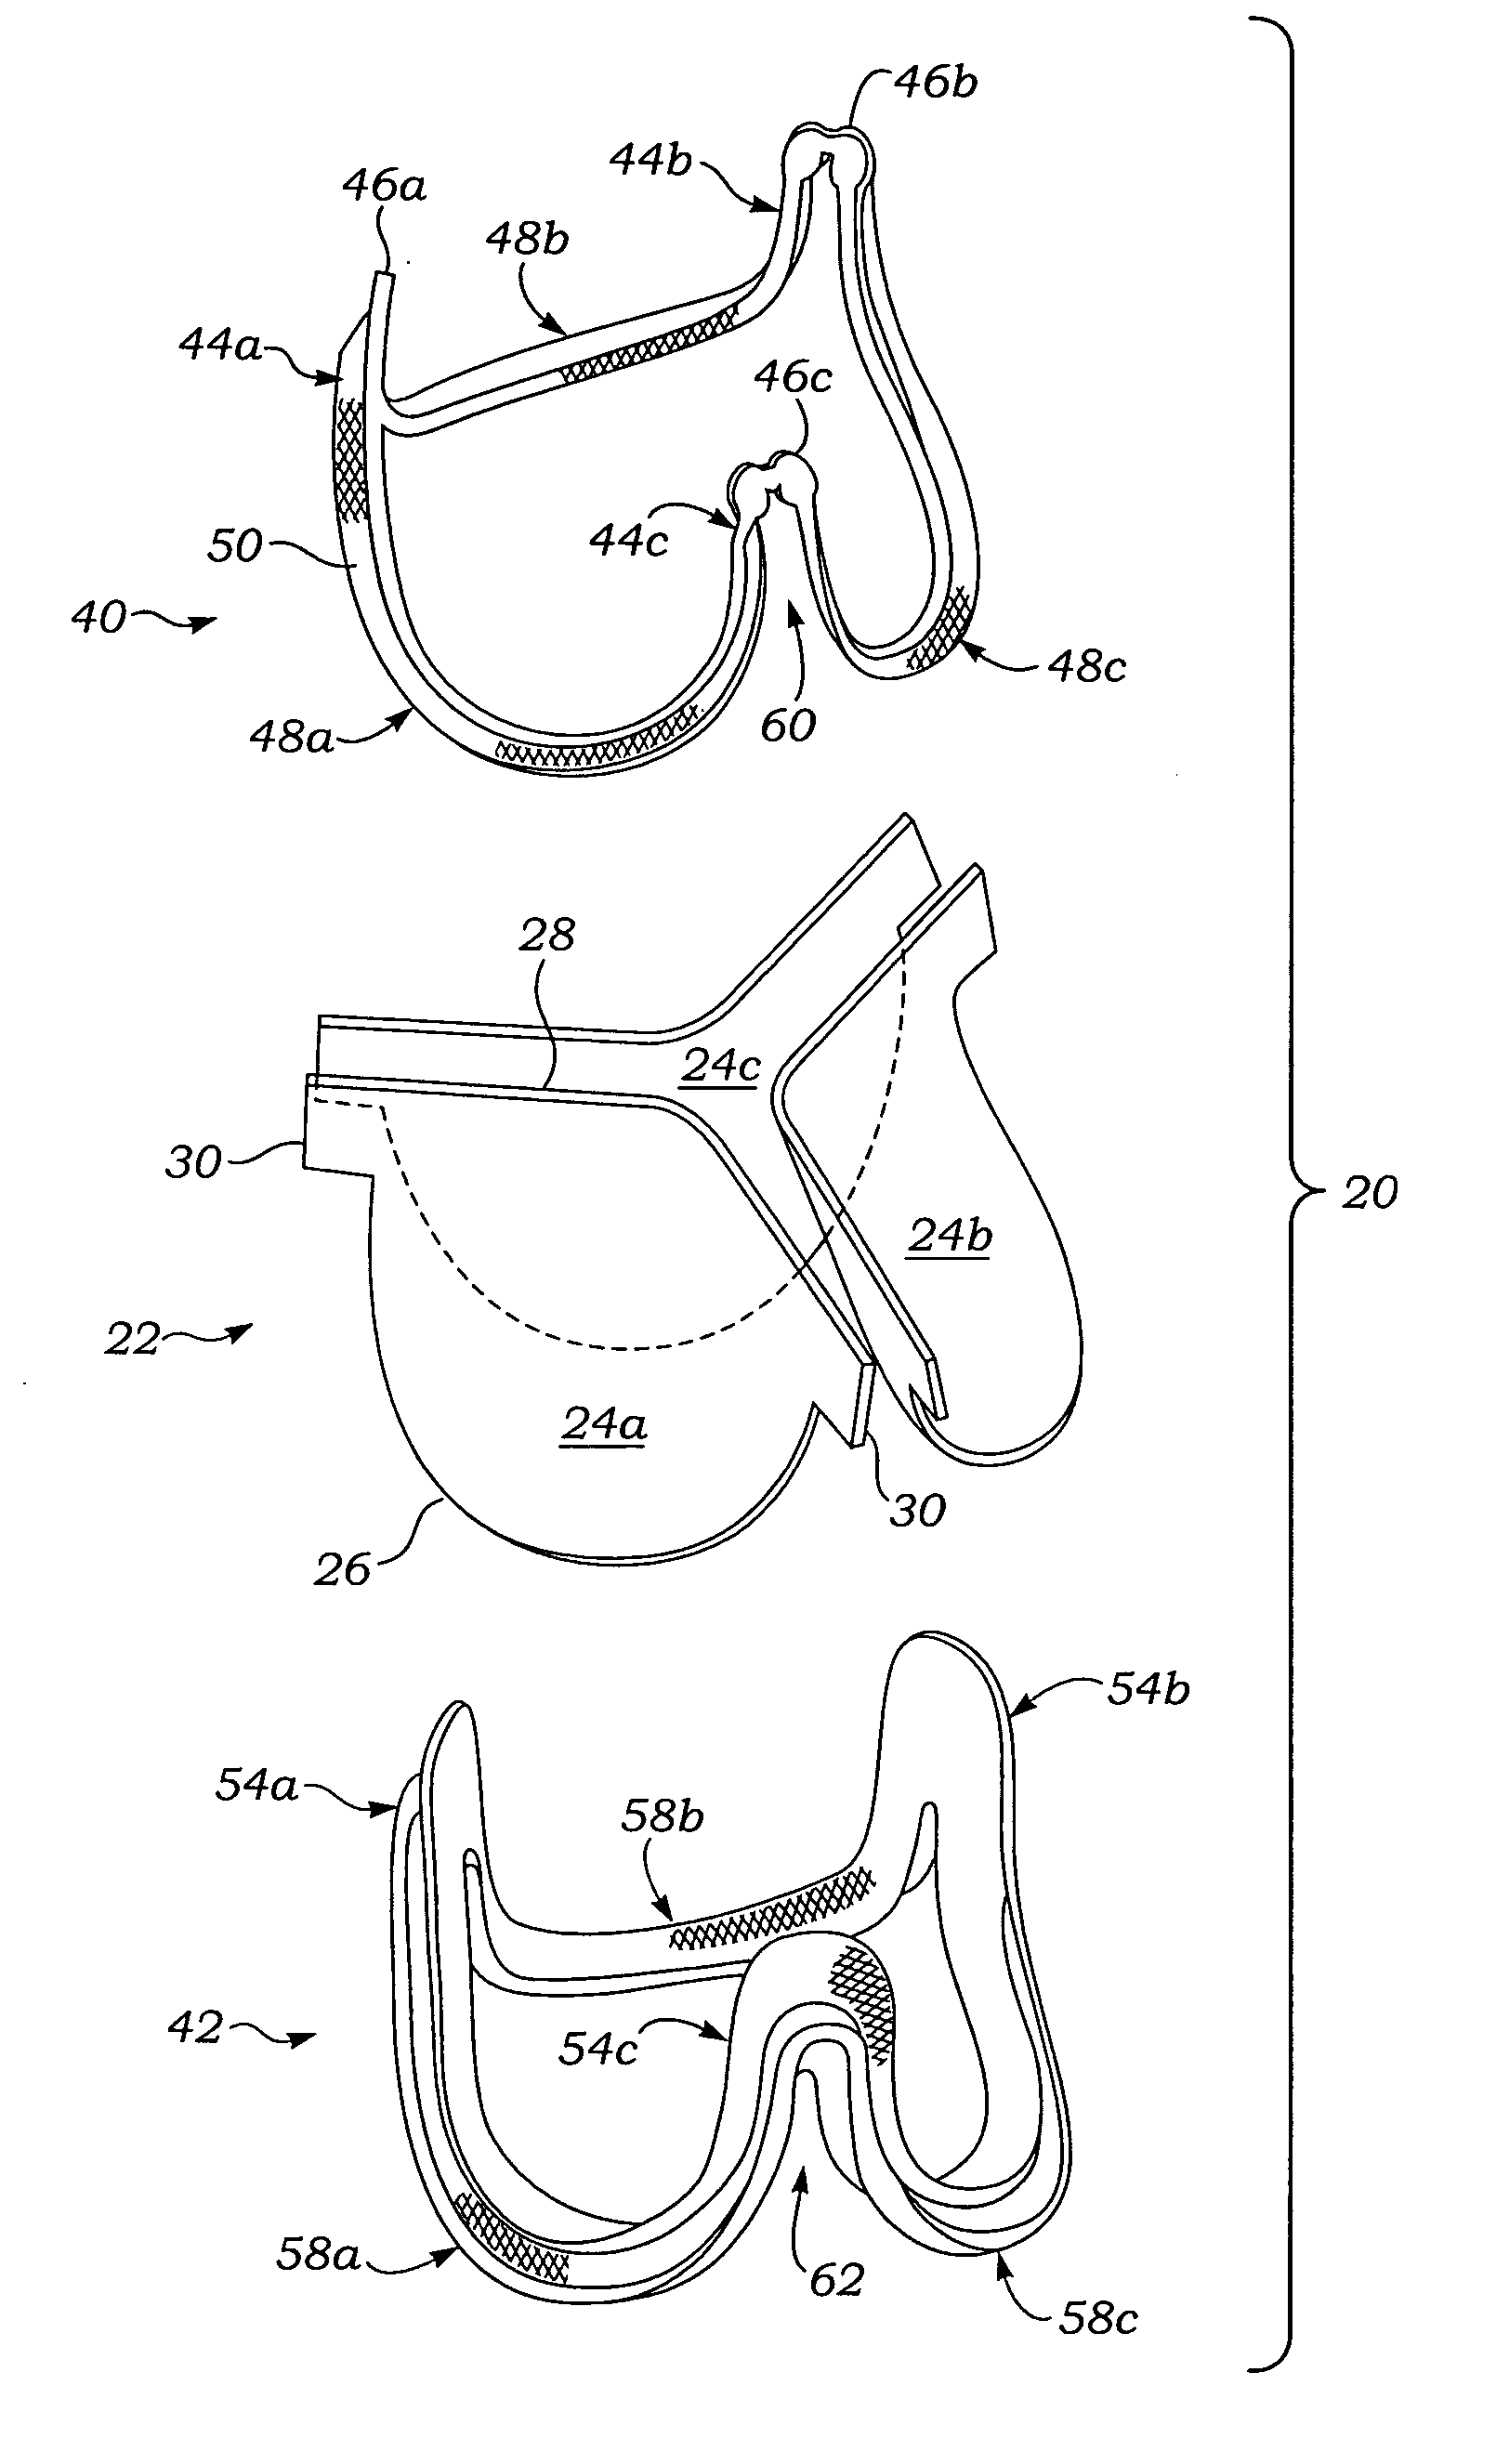 Controlled separation heart valve frame